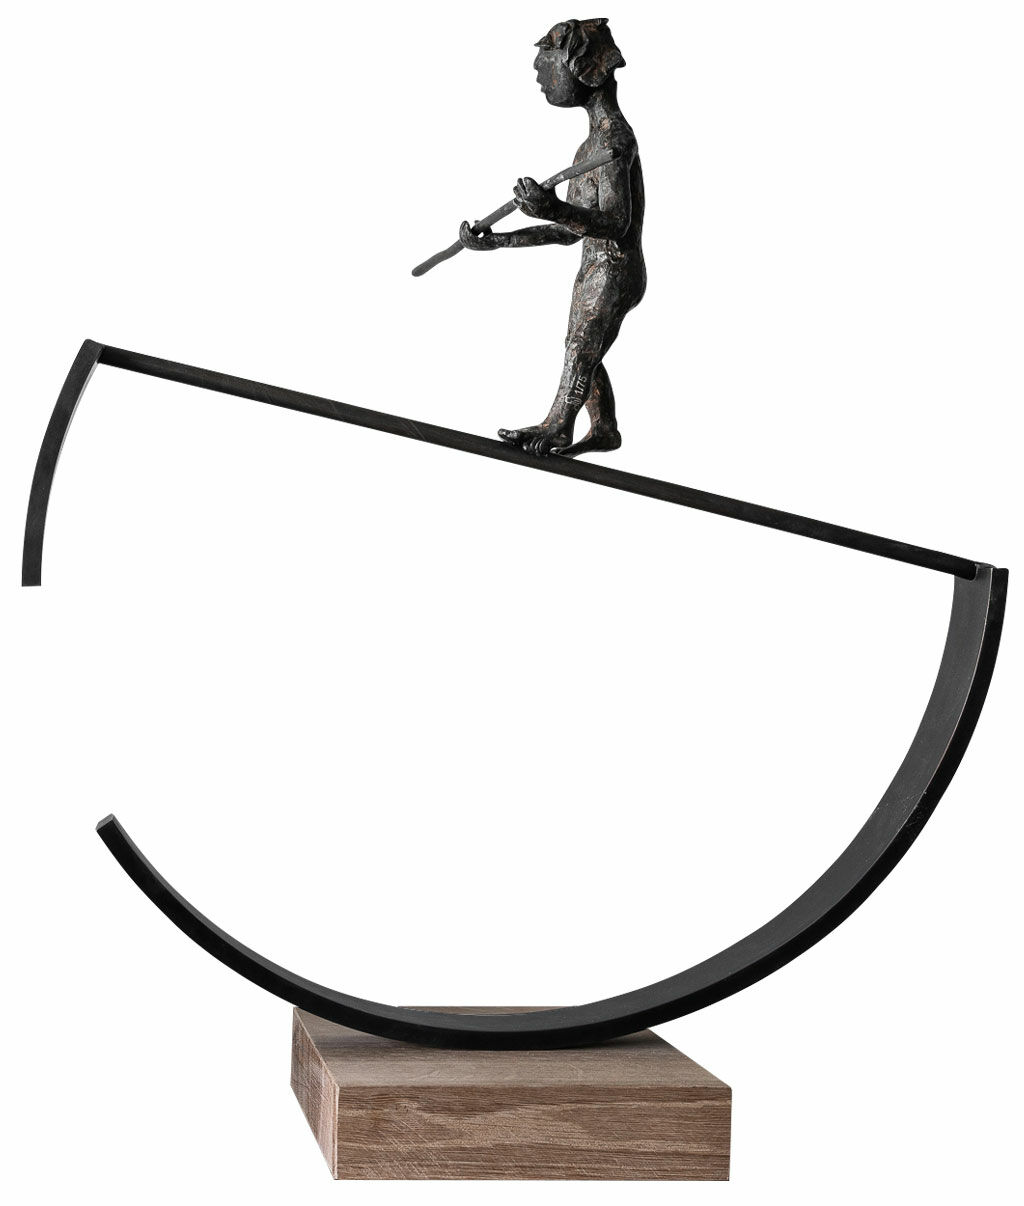 Skulptur "Balance", Bronze von Freddy de Waele